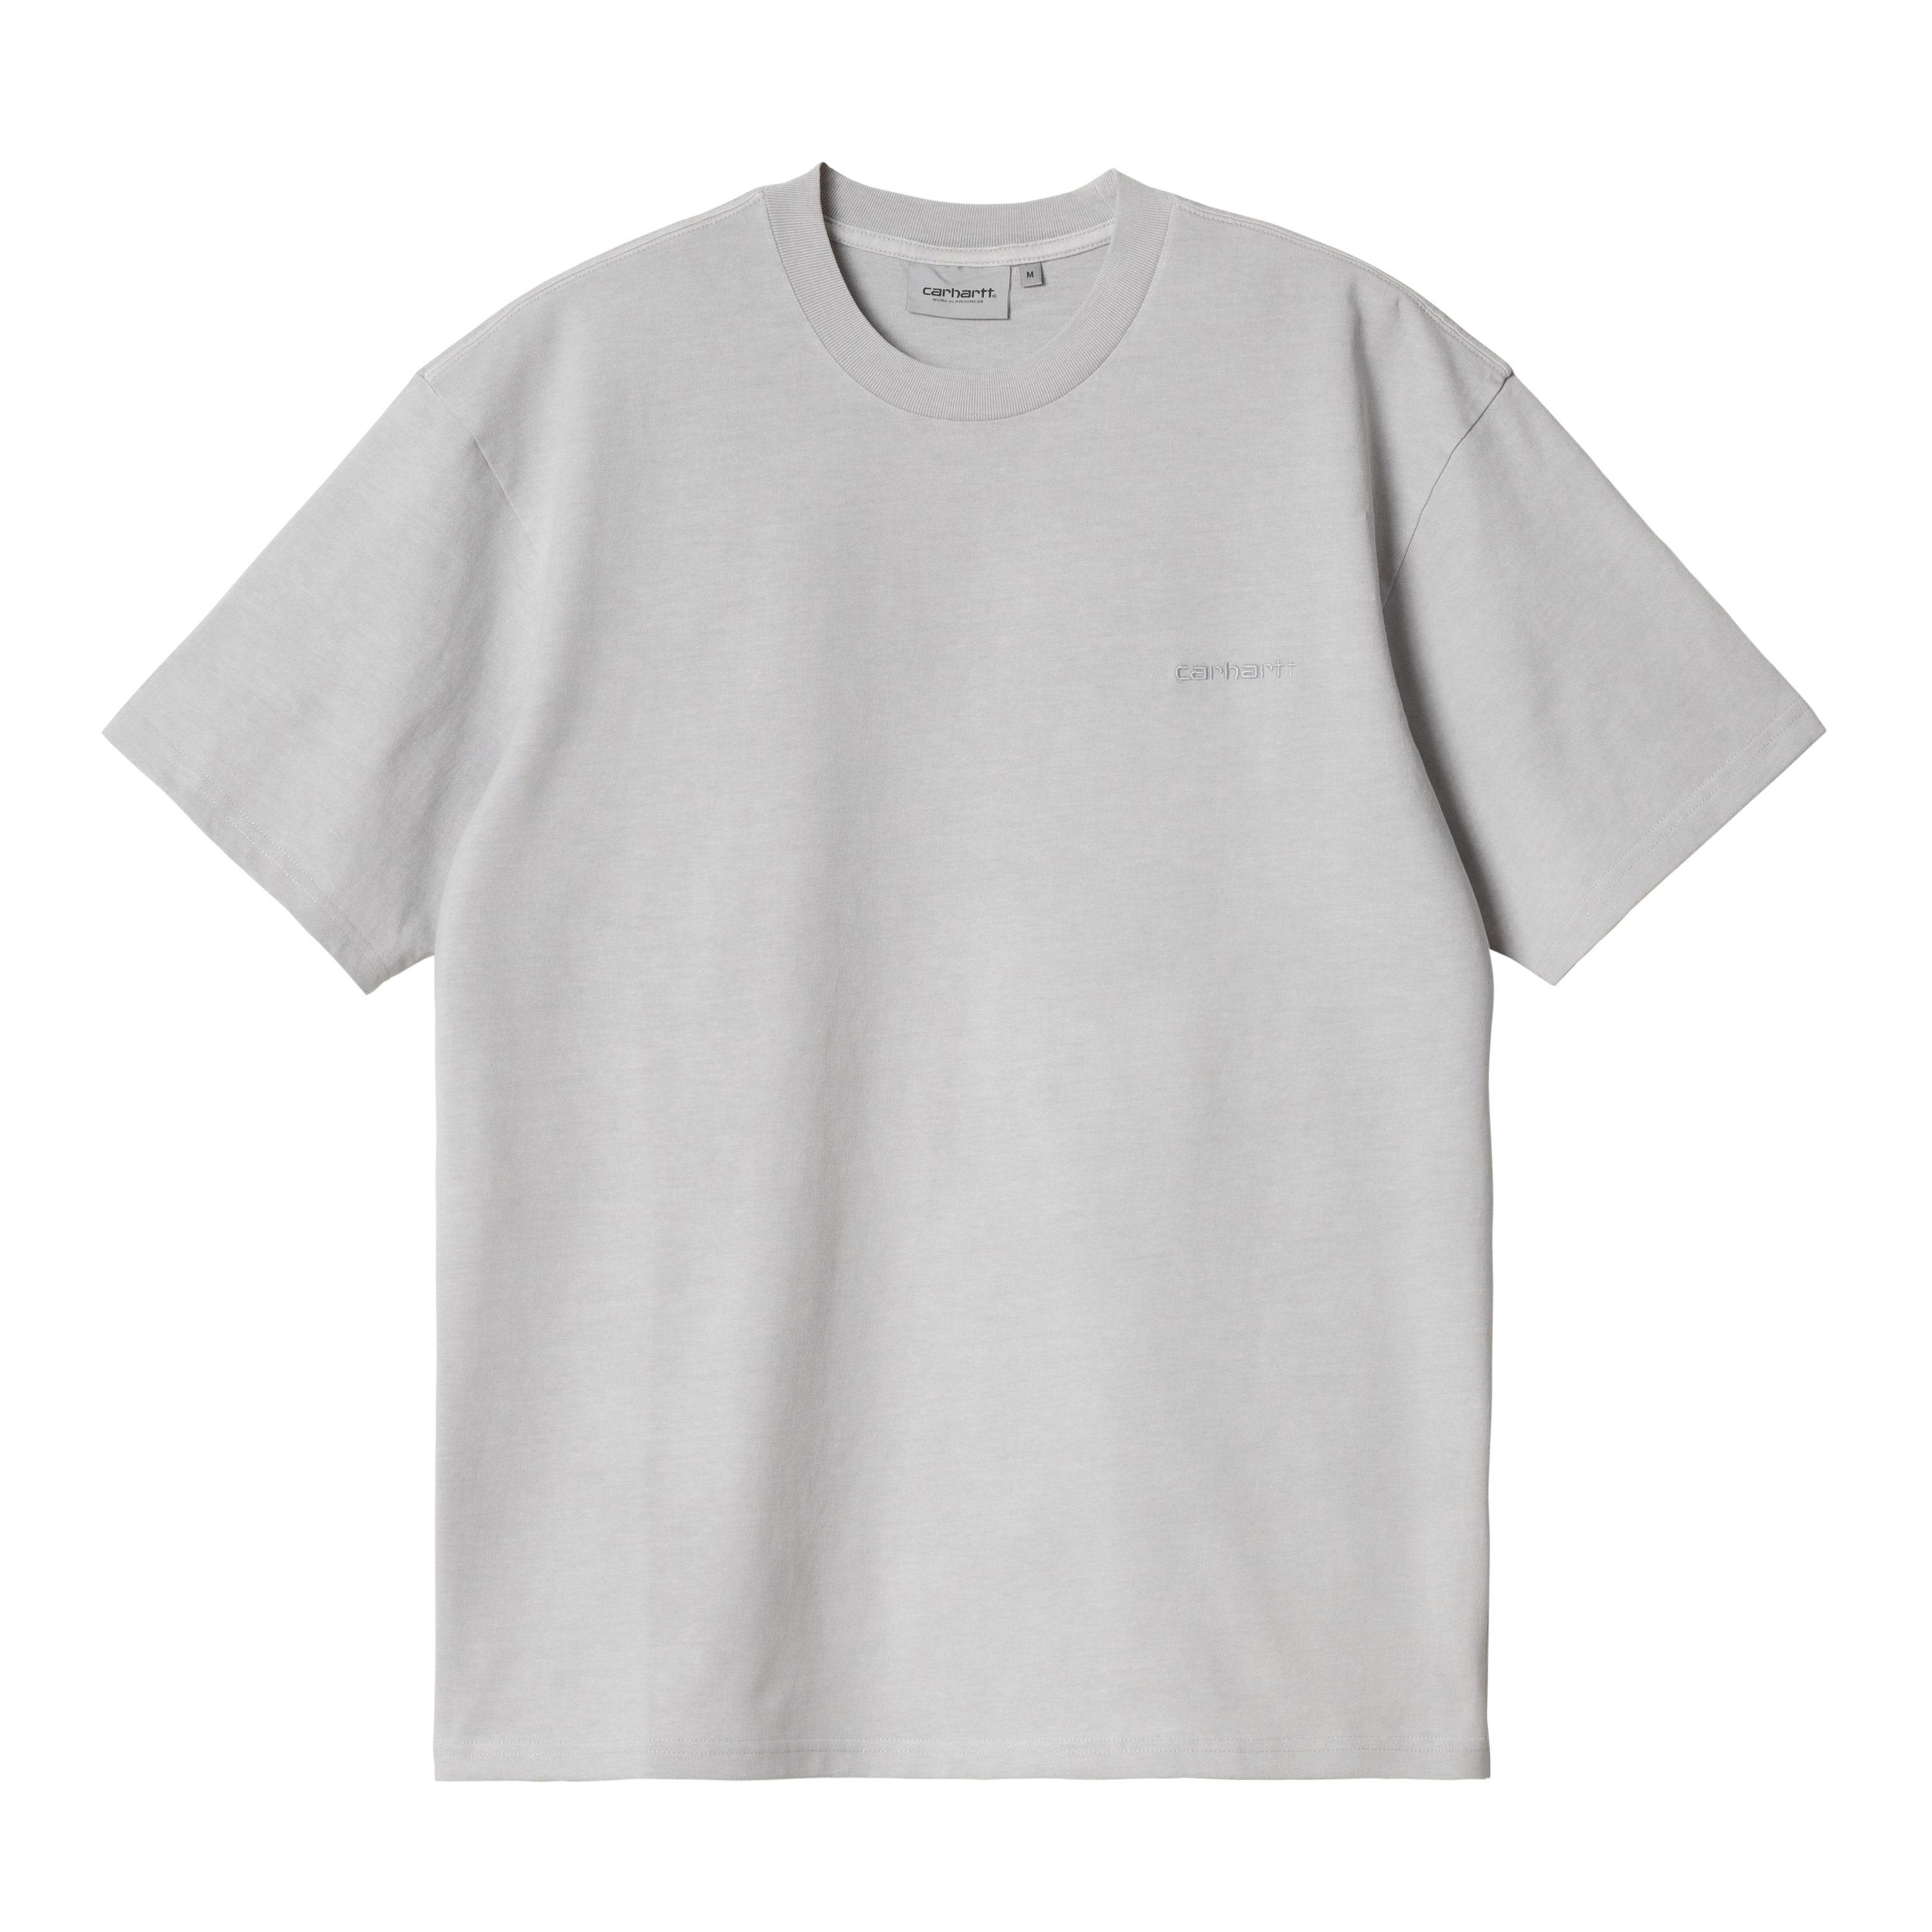 Carhartt WIP Short Sleeve Duster Script T-Shirt in